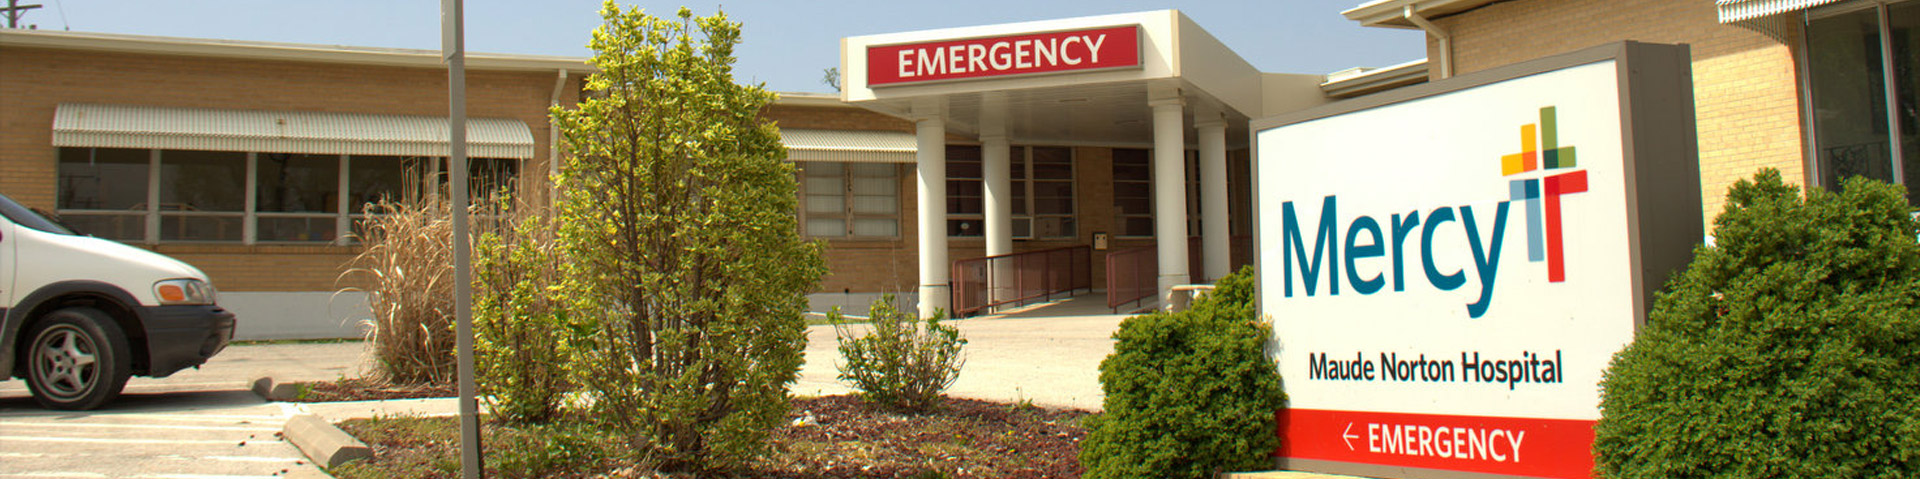 WEB_Hero_Location_Mercy-Hospital-Columbus